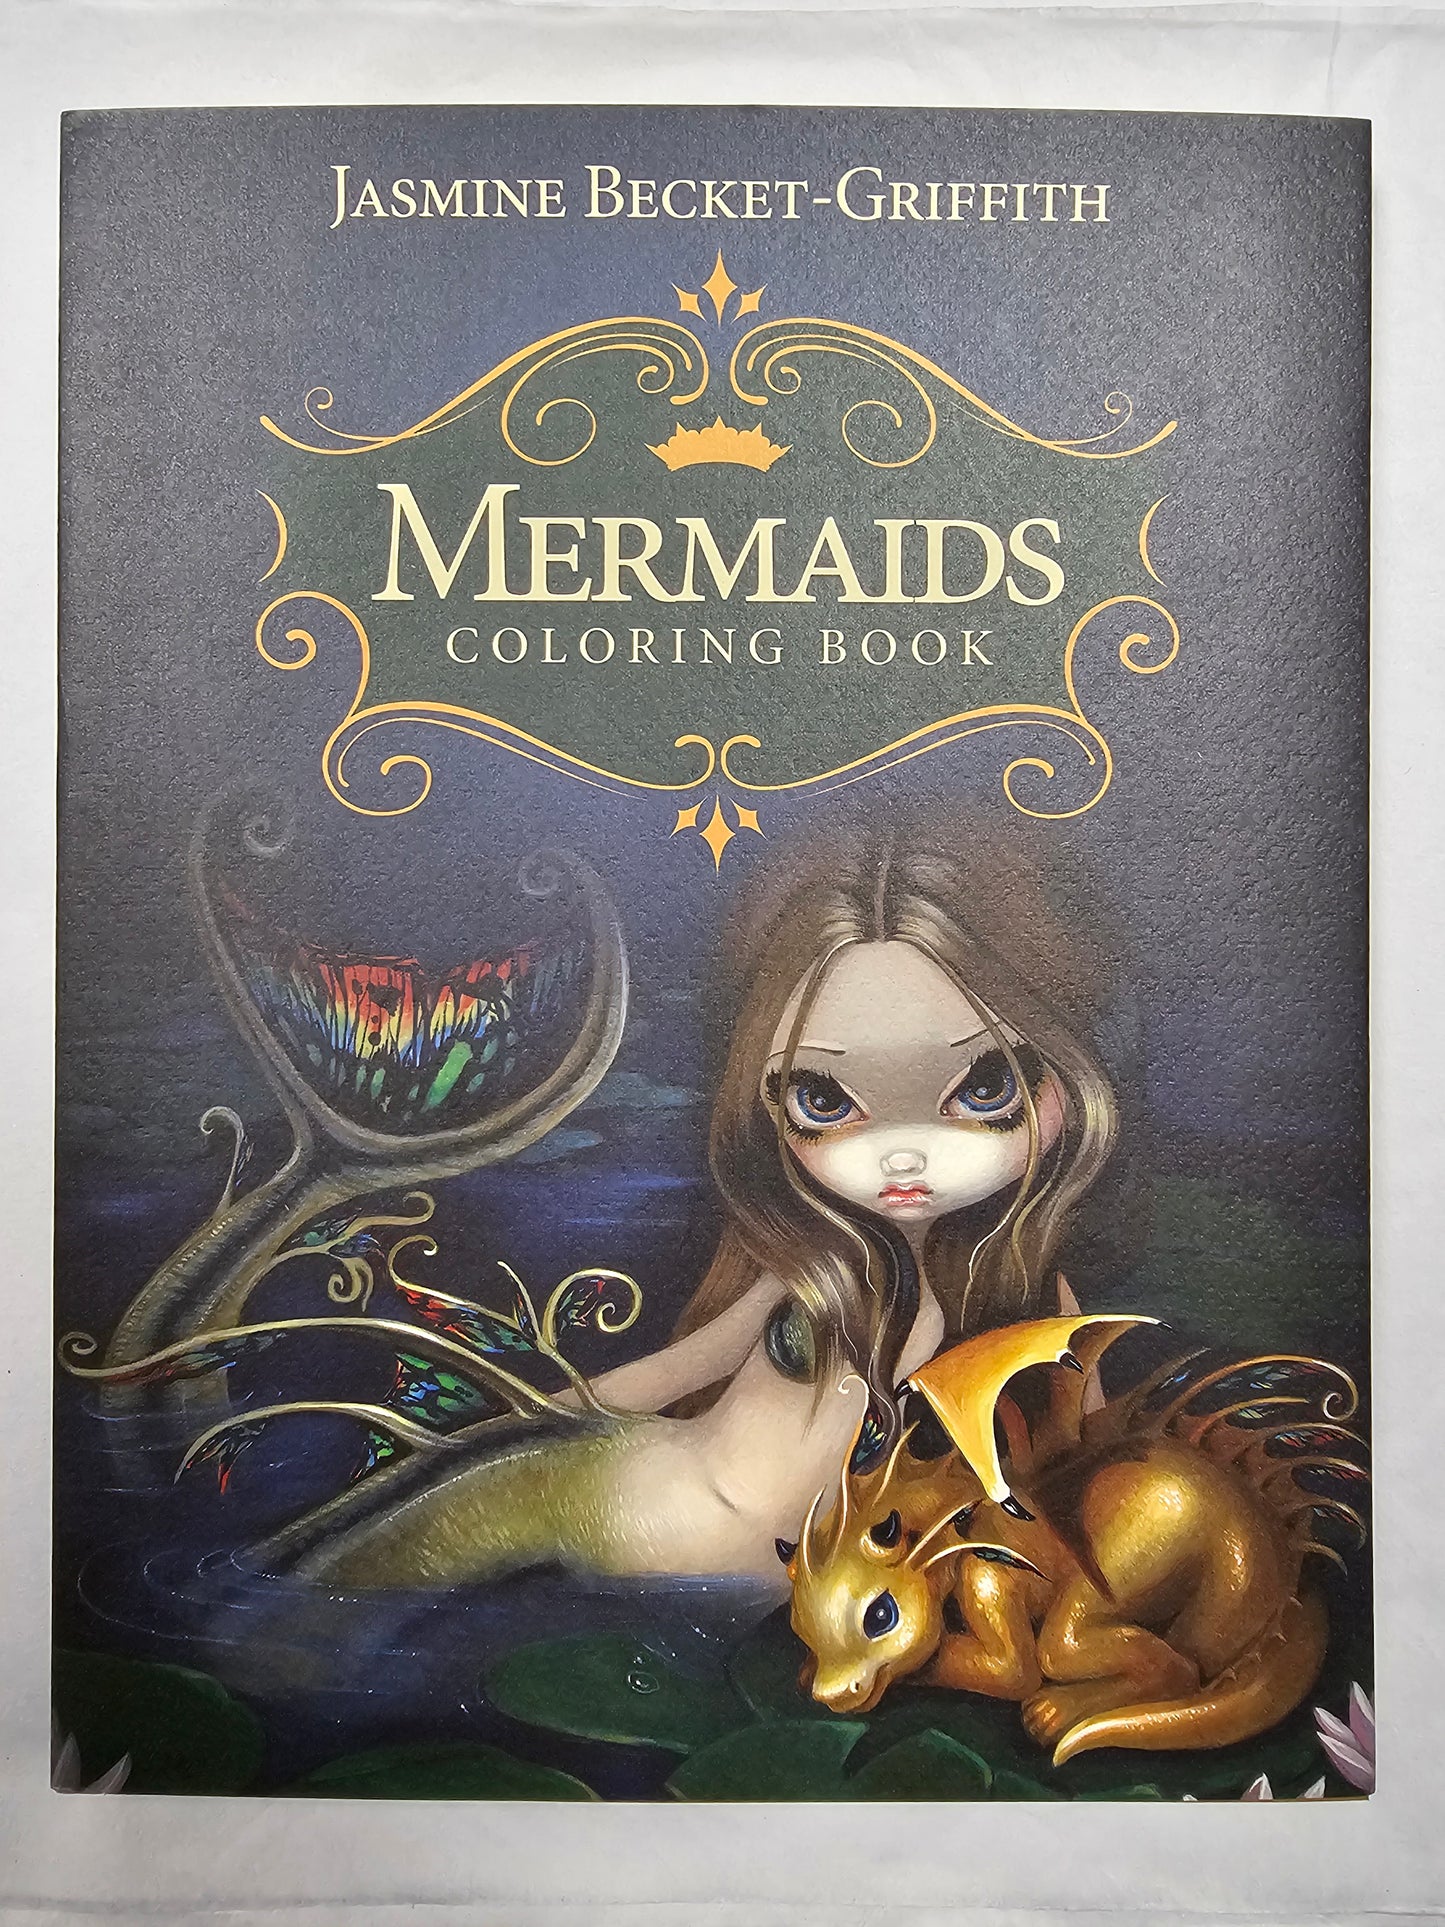 Mermaids colouring book